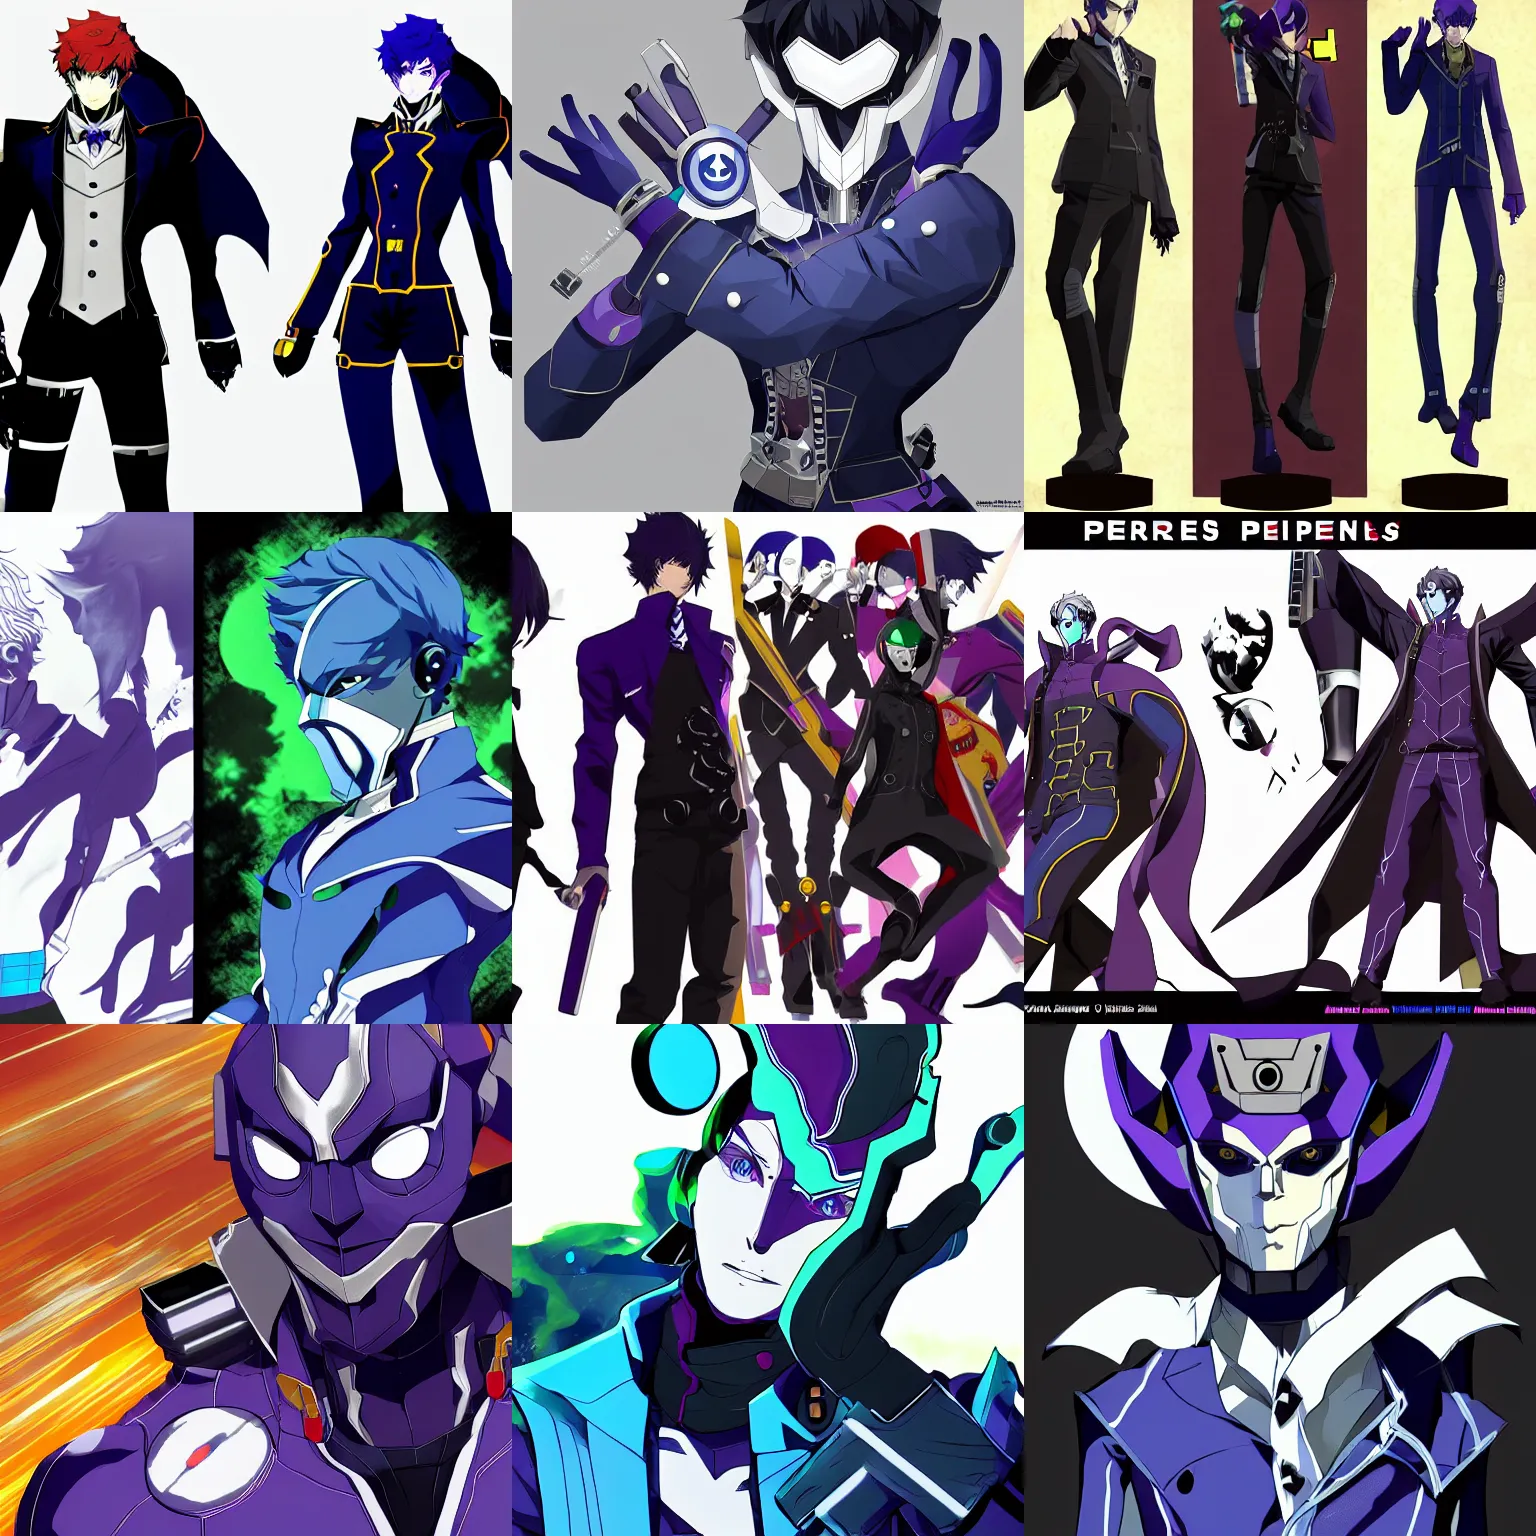 Prompt: persona 3 main character merged with Thanos persona, SMT Persona 3, character design, dramatic illustration by Kazuma Kaneko trending on ArtStation